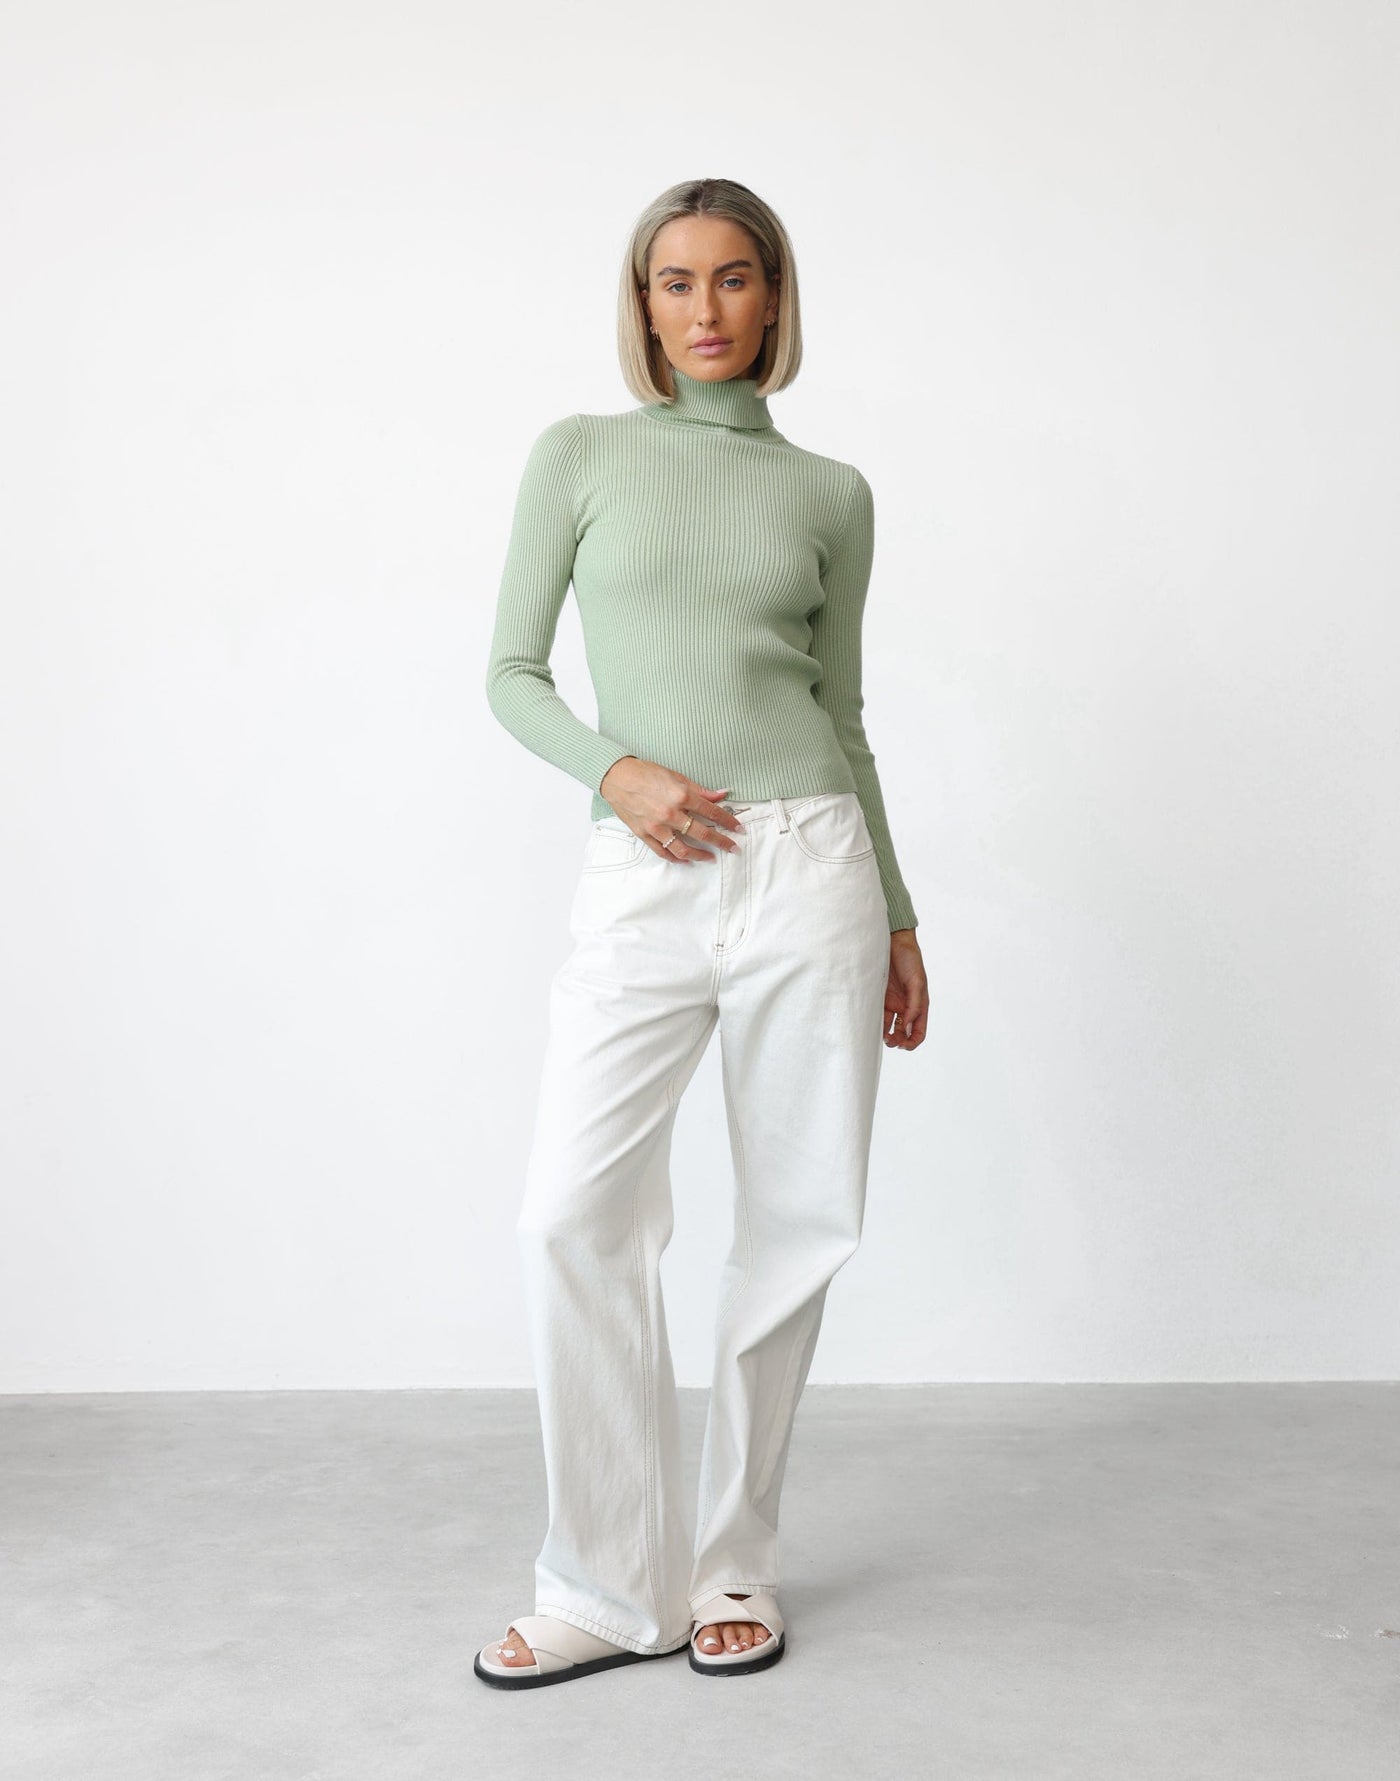 Davison Long Sleeve Top (Sage) - Turtleneck Long Sleeve Knit Top - Women's Top - Charcoal Clothing